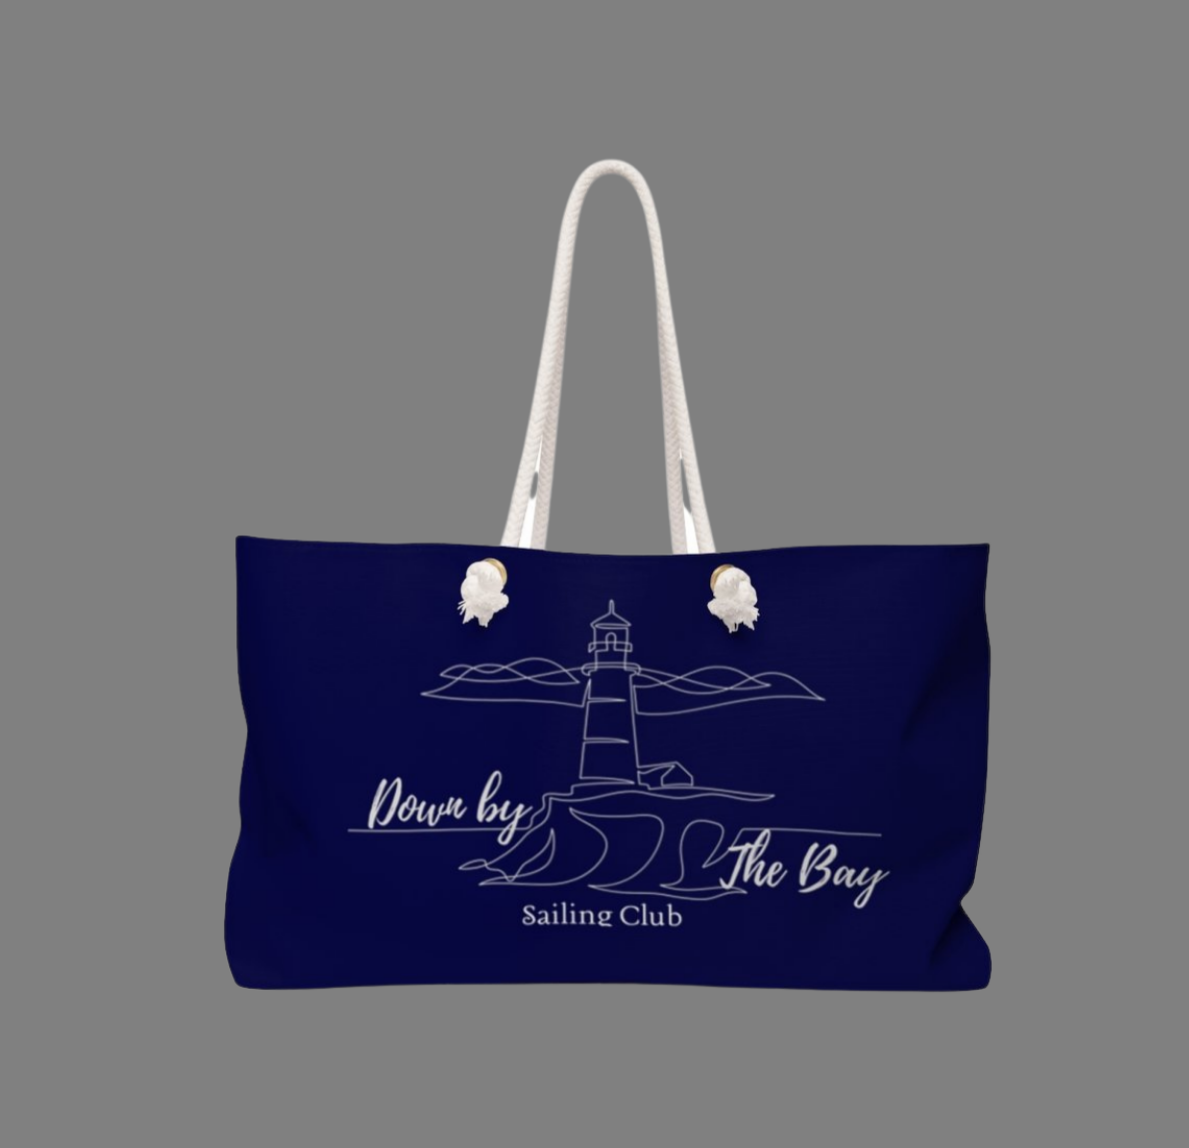 Down By The Bay Sailing Club Weekender Bag